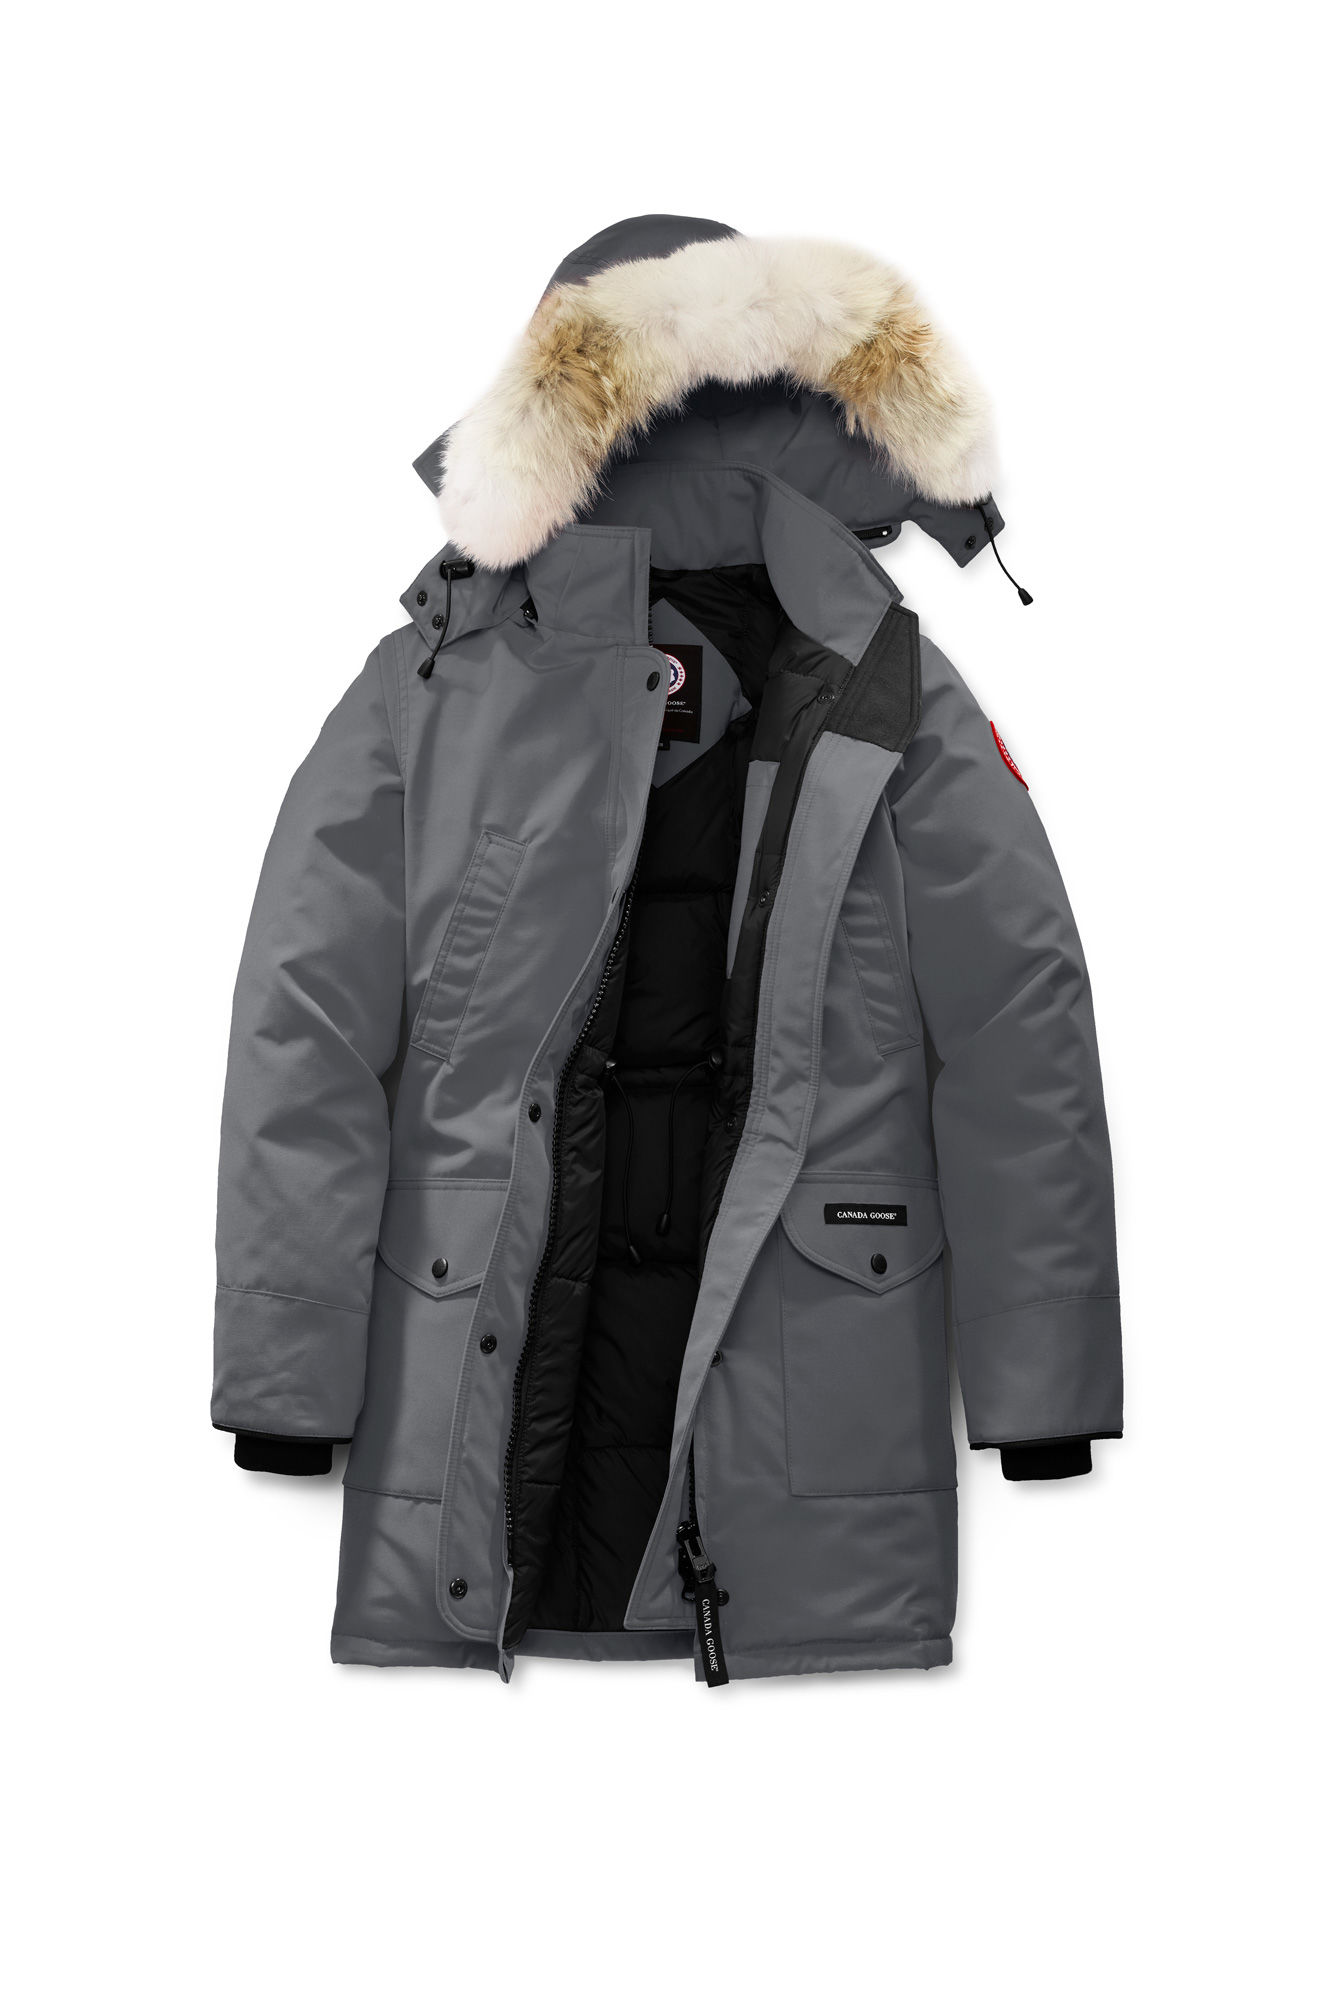 canada goose short jacket with fur